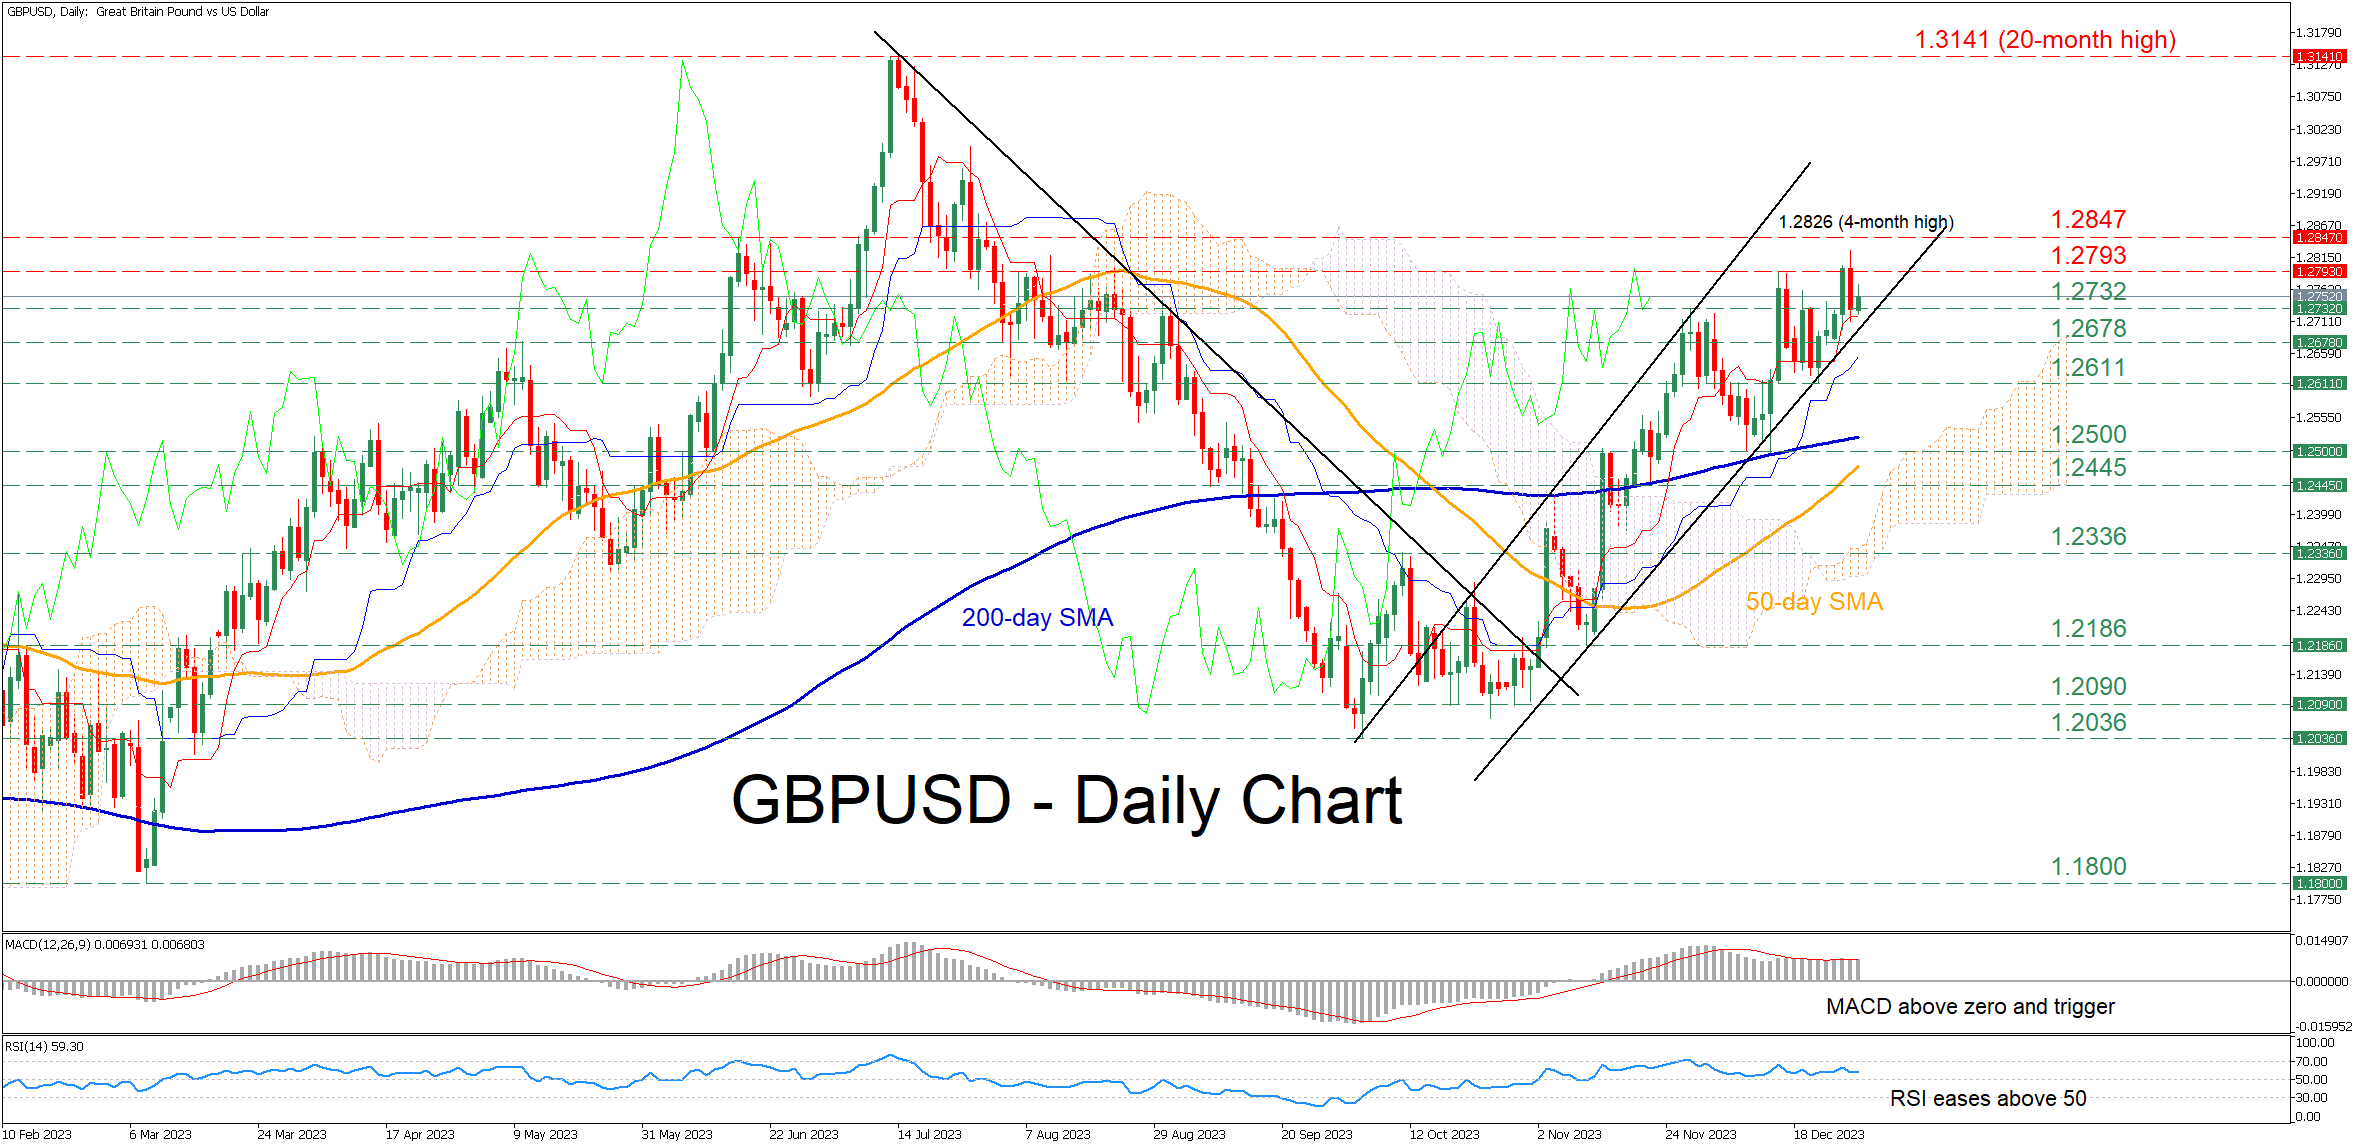 GBPUSD's Bullish Trend Maintains Momentum Despite Recent Pause